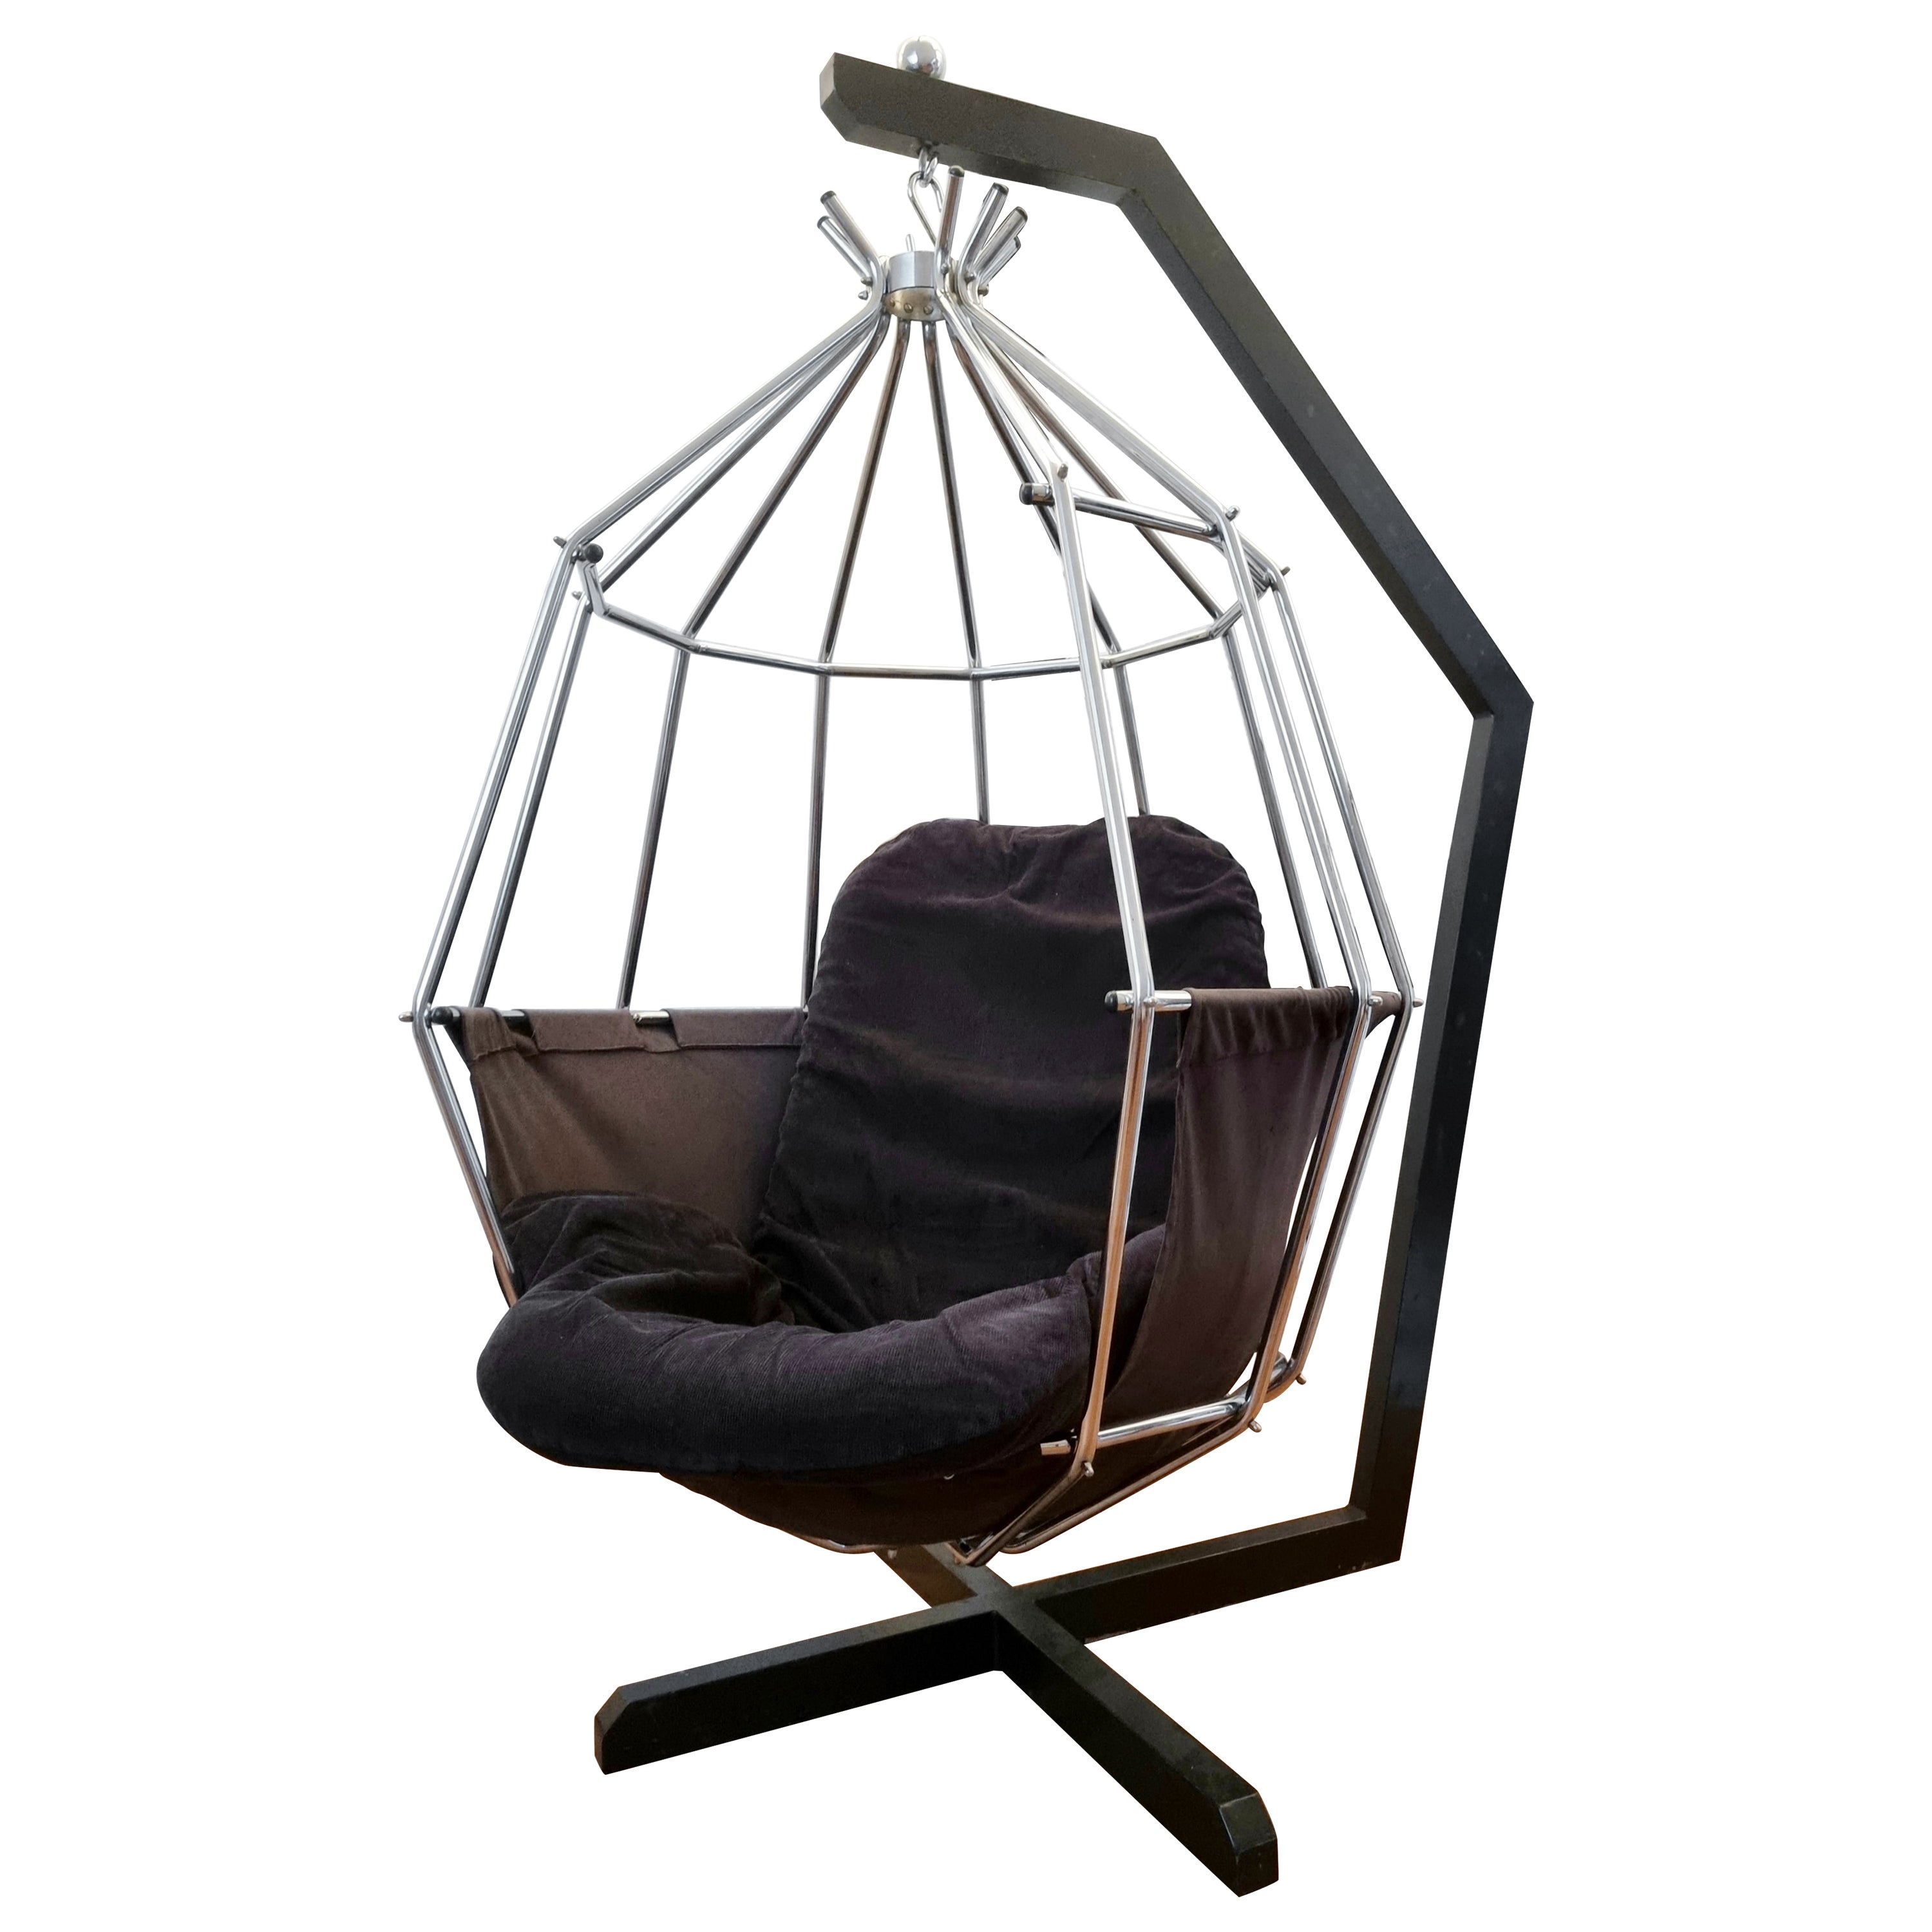 Iconic midcentury Scandinavian modern, "Parrot Chair" / Pepegojan, Swedish 1970s